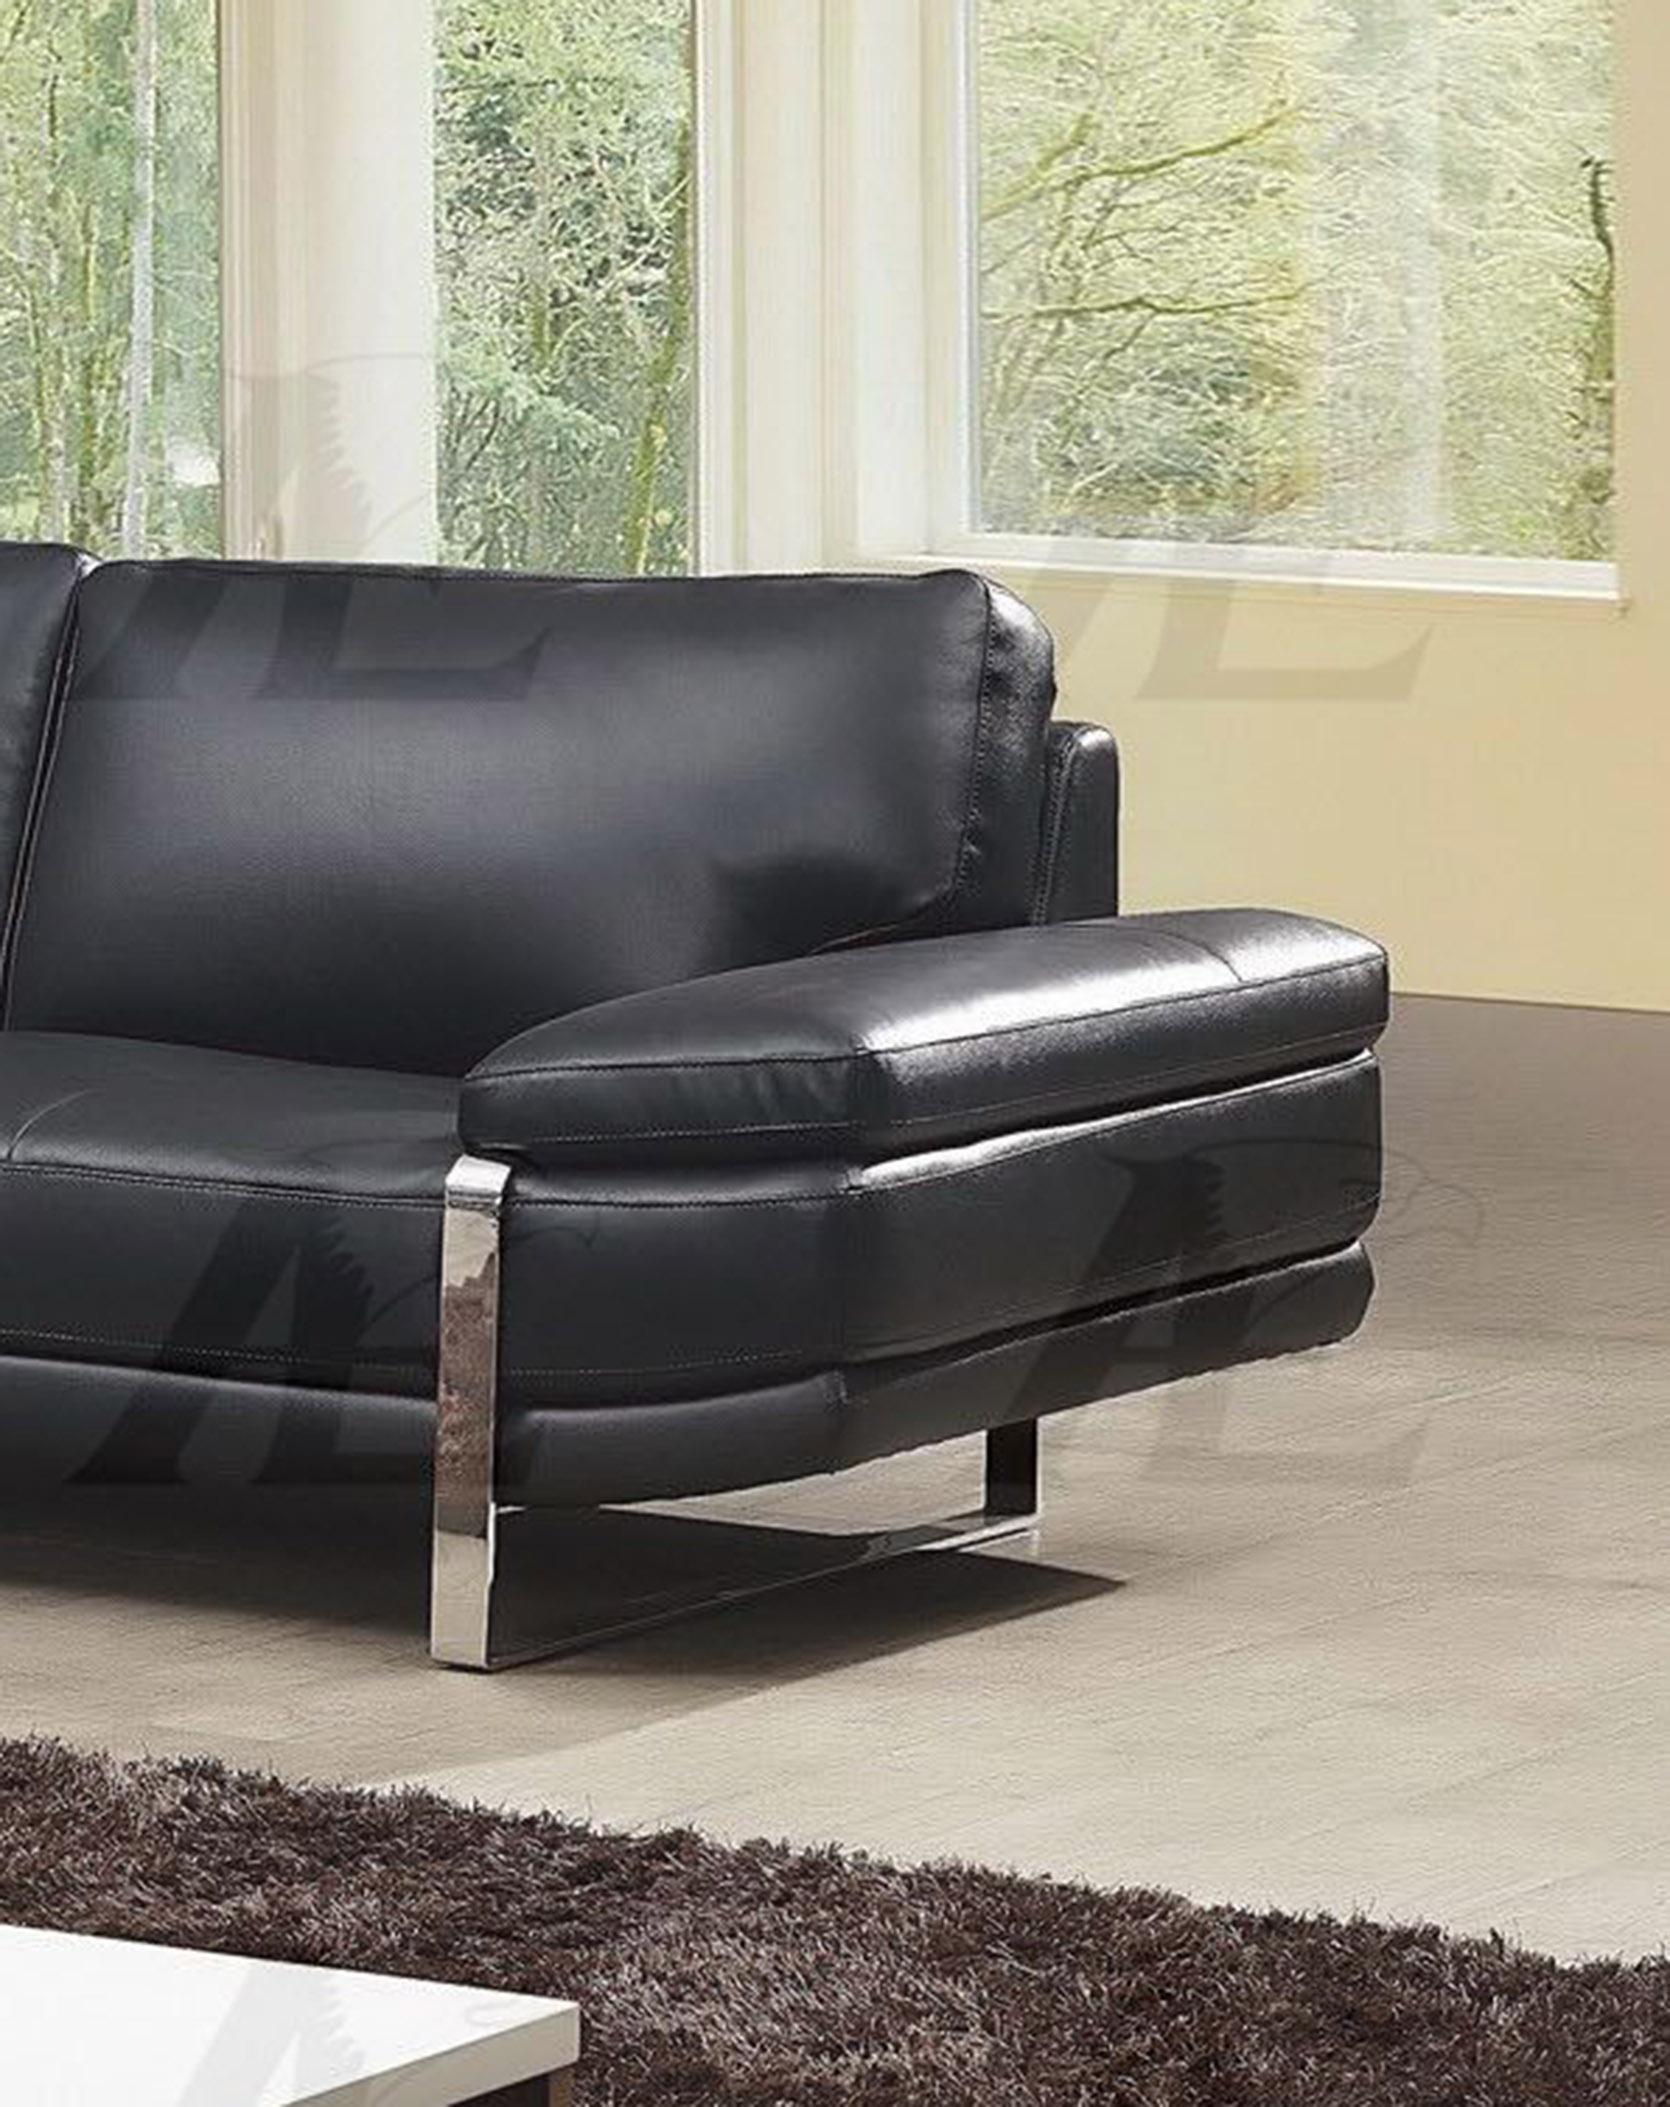 

    
American Eagle Furniture EK-L025-BK Sectional Sofa Black EK-L025L-BK
